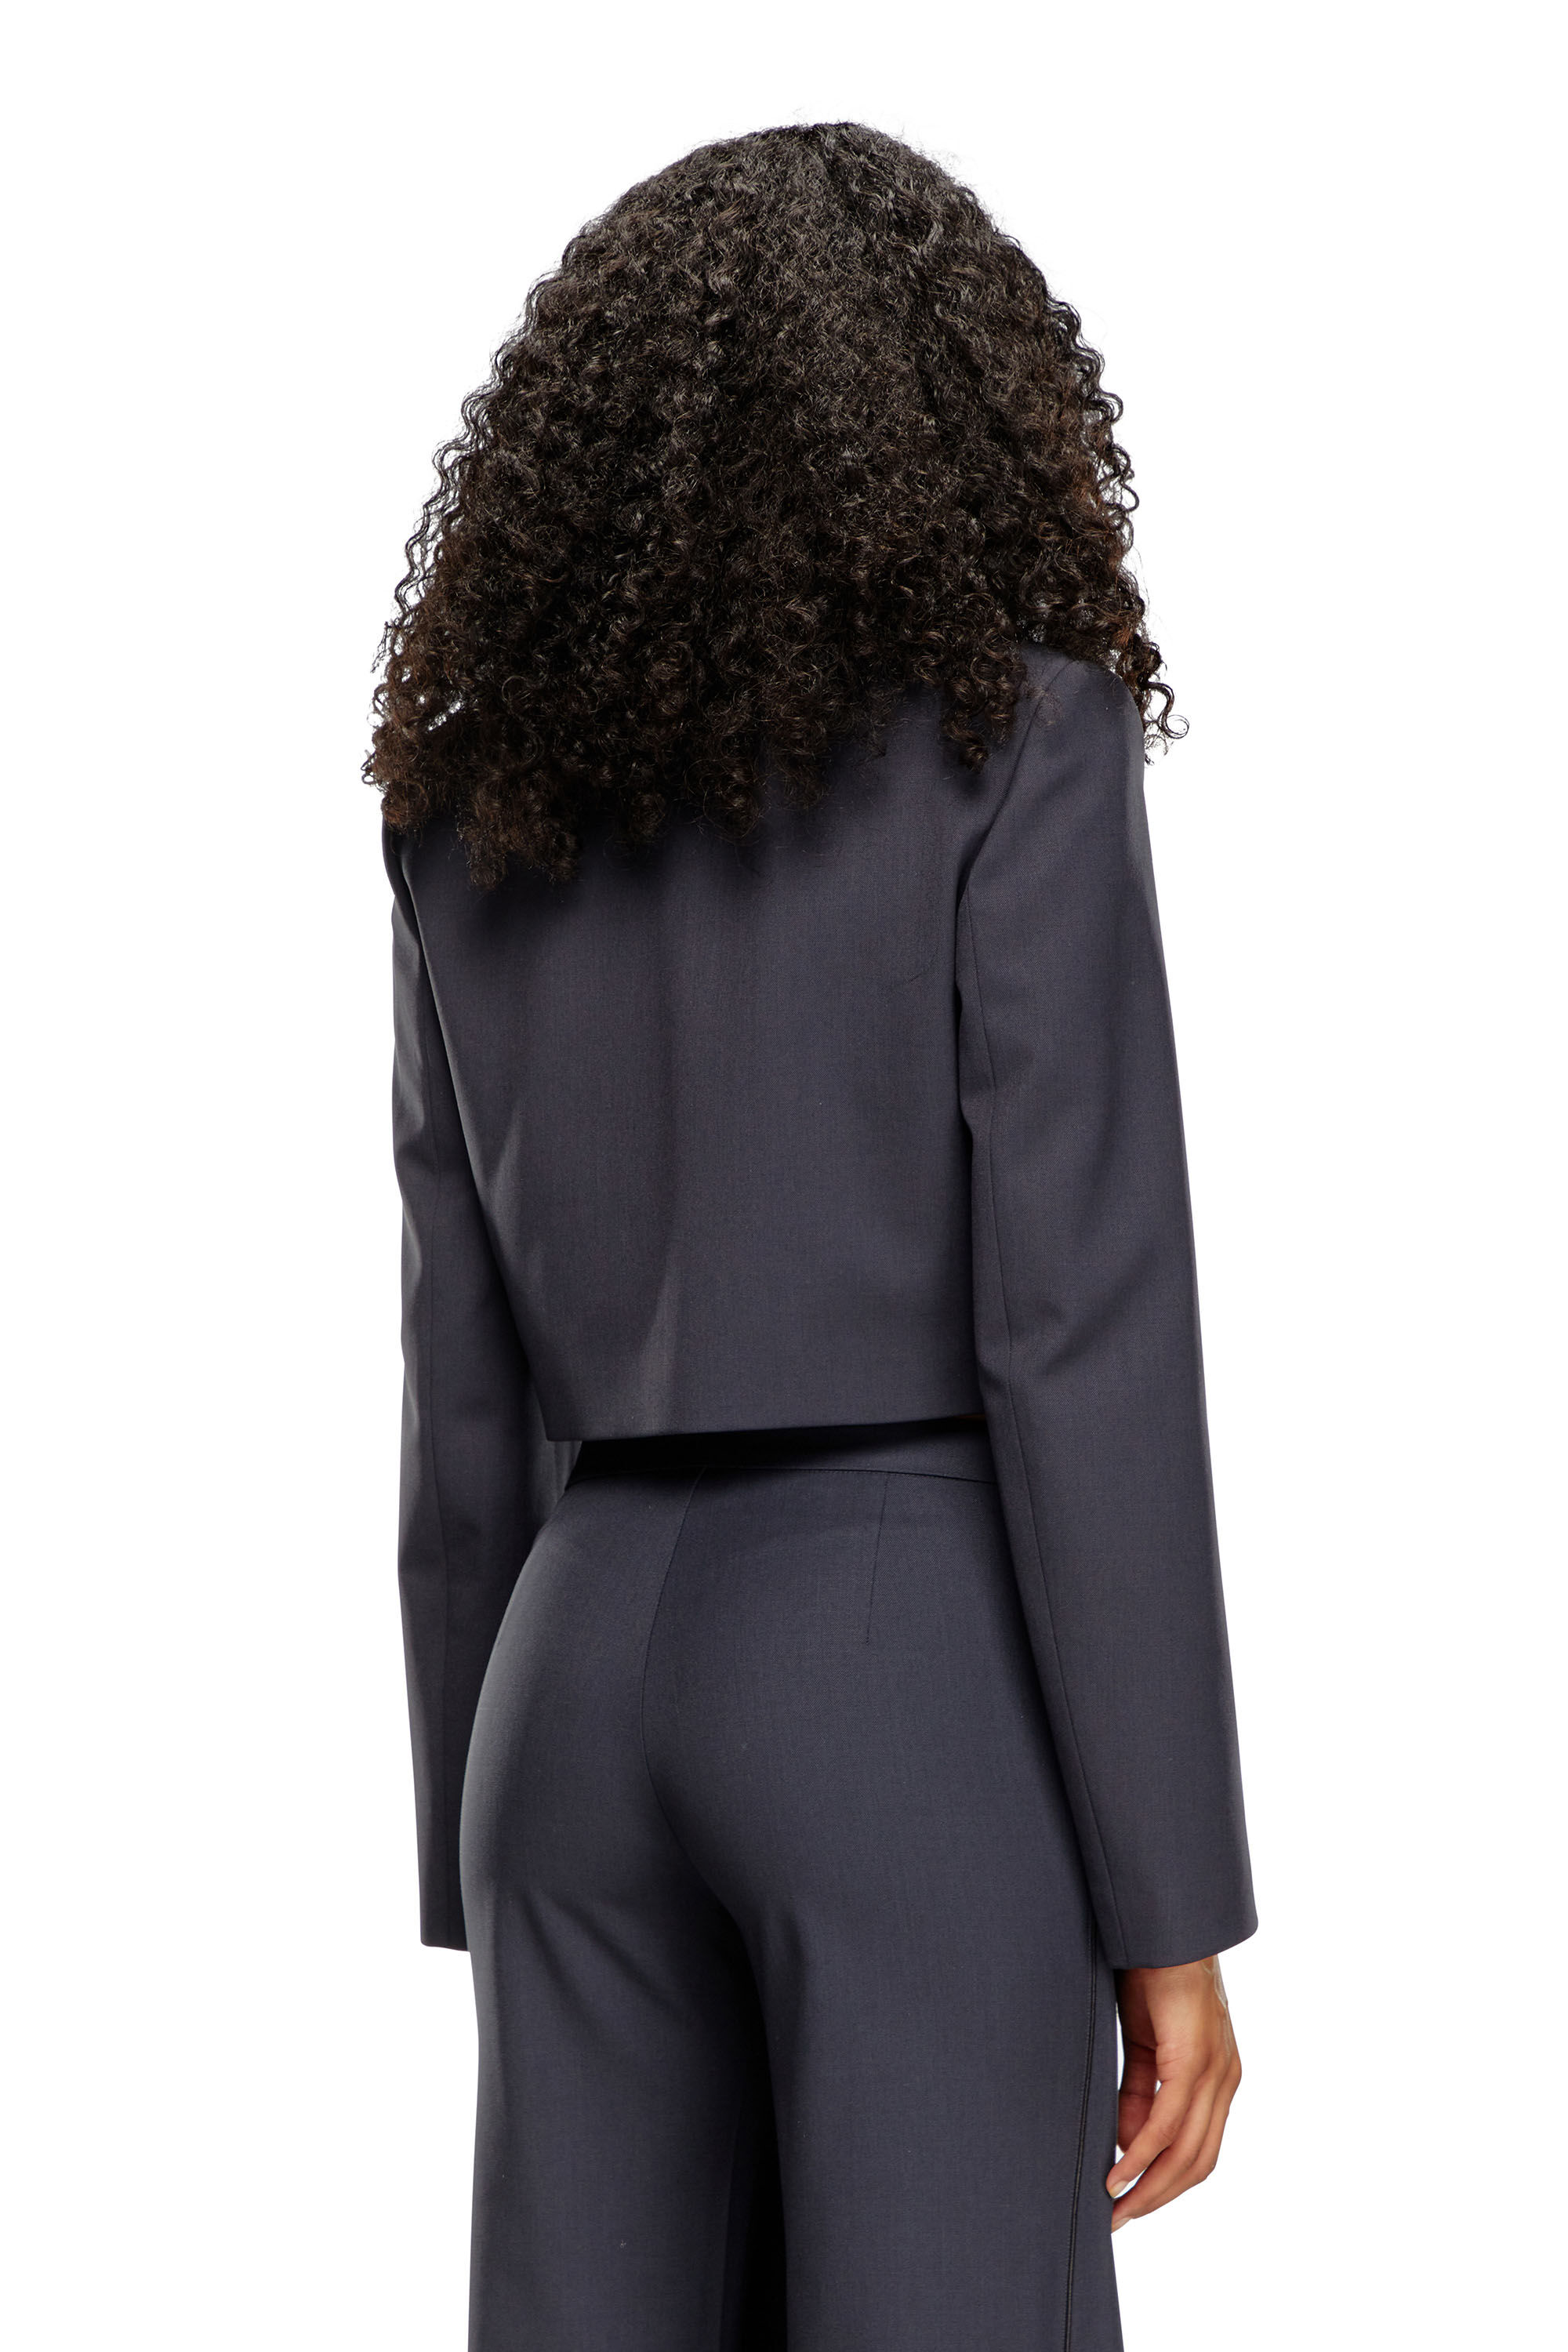 Diesel - G-MILLA-P1, Female Cropped blazer in stretch wool blend in グレー - Image 5